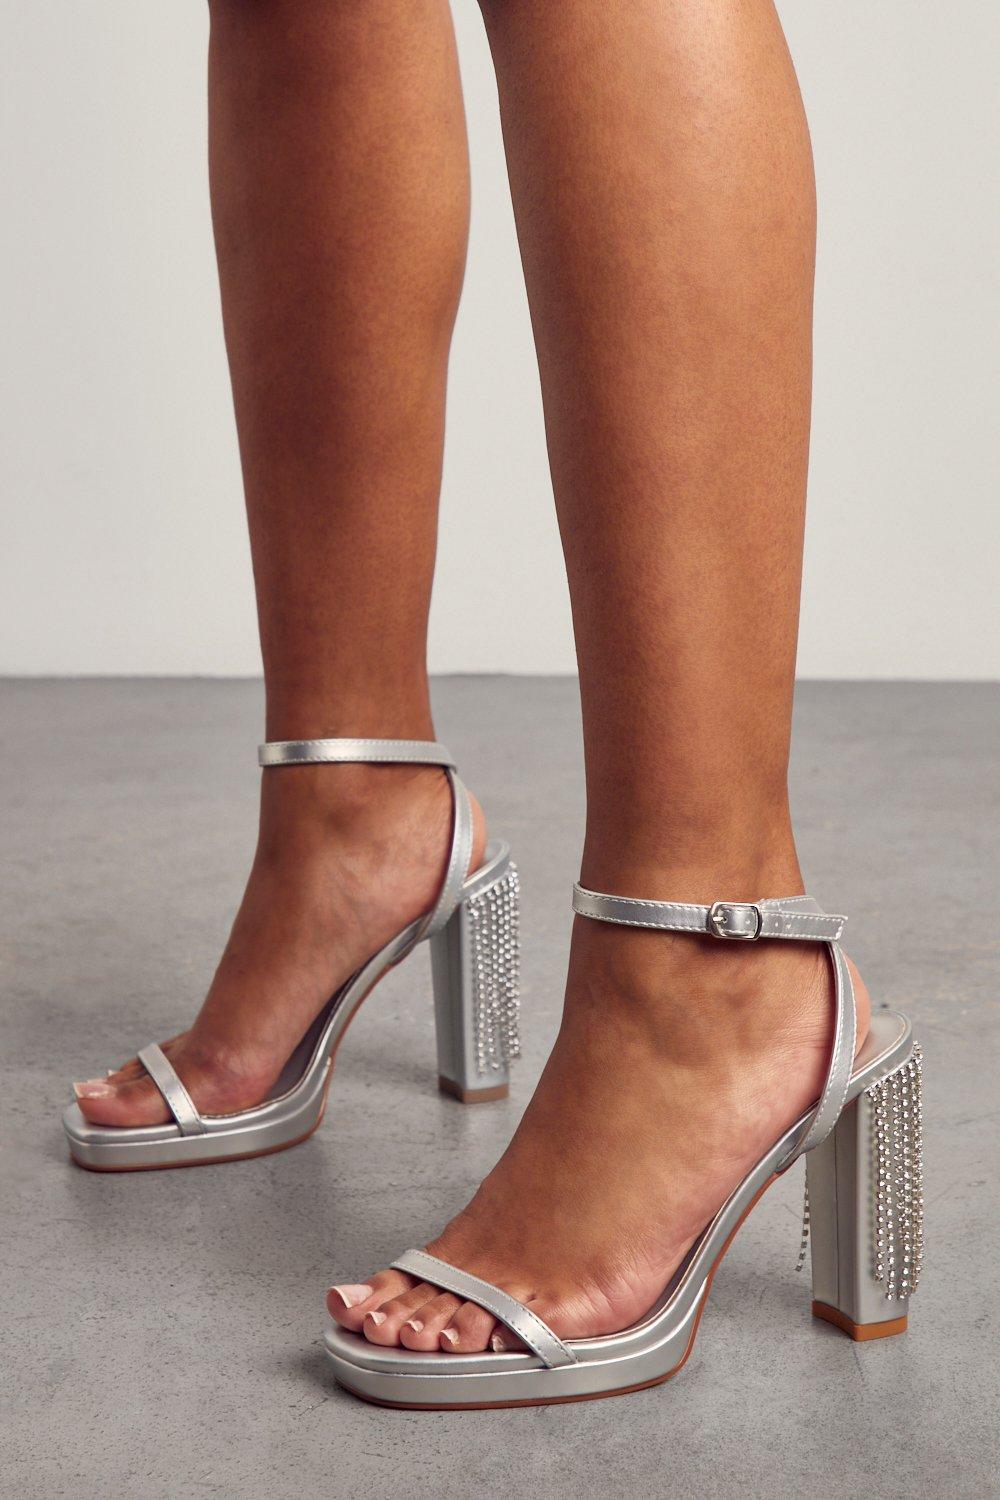 Amazon.com | Womens Sky High Platform Heels Ladies Black Patent Stiletto  Strappy Ankle Strap Peep Toe Shoes Size 5 B(M) US | Platforms & Wedges